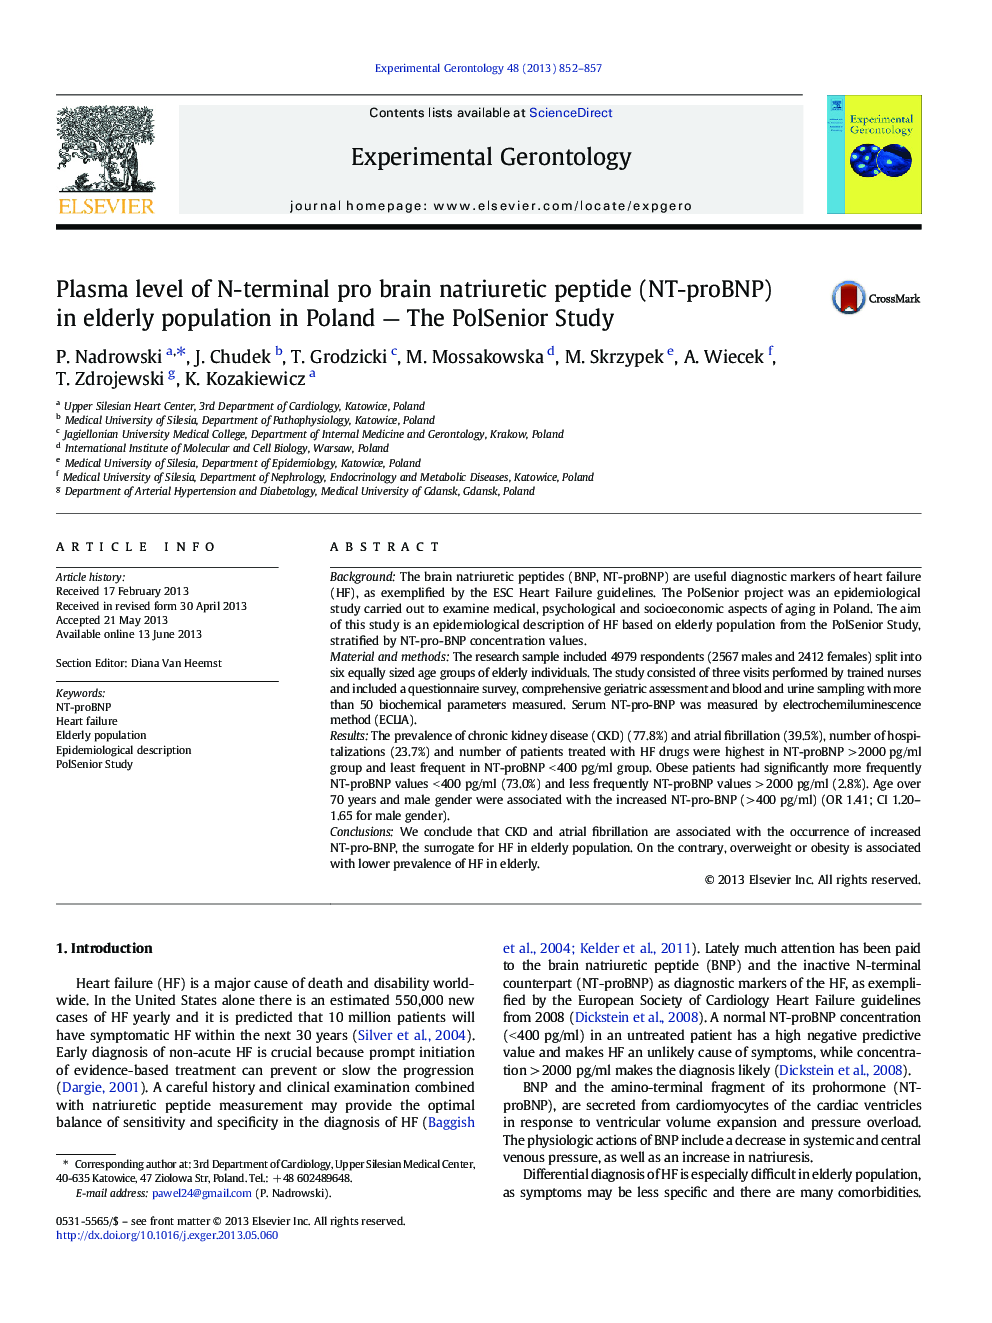 Plasma level of N-terminal pro brain natriuretic peptide (NT-proBNP) in elderly population in Poland - The PolSenior Study